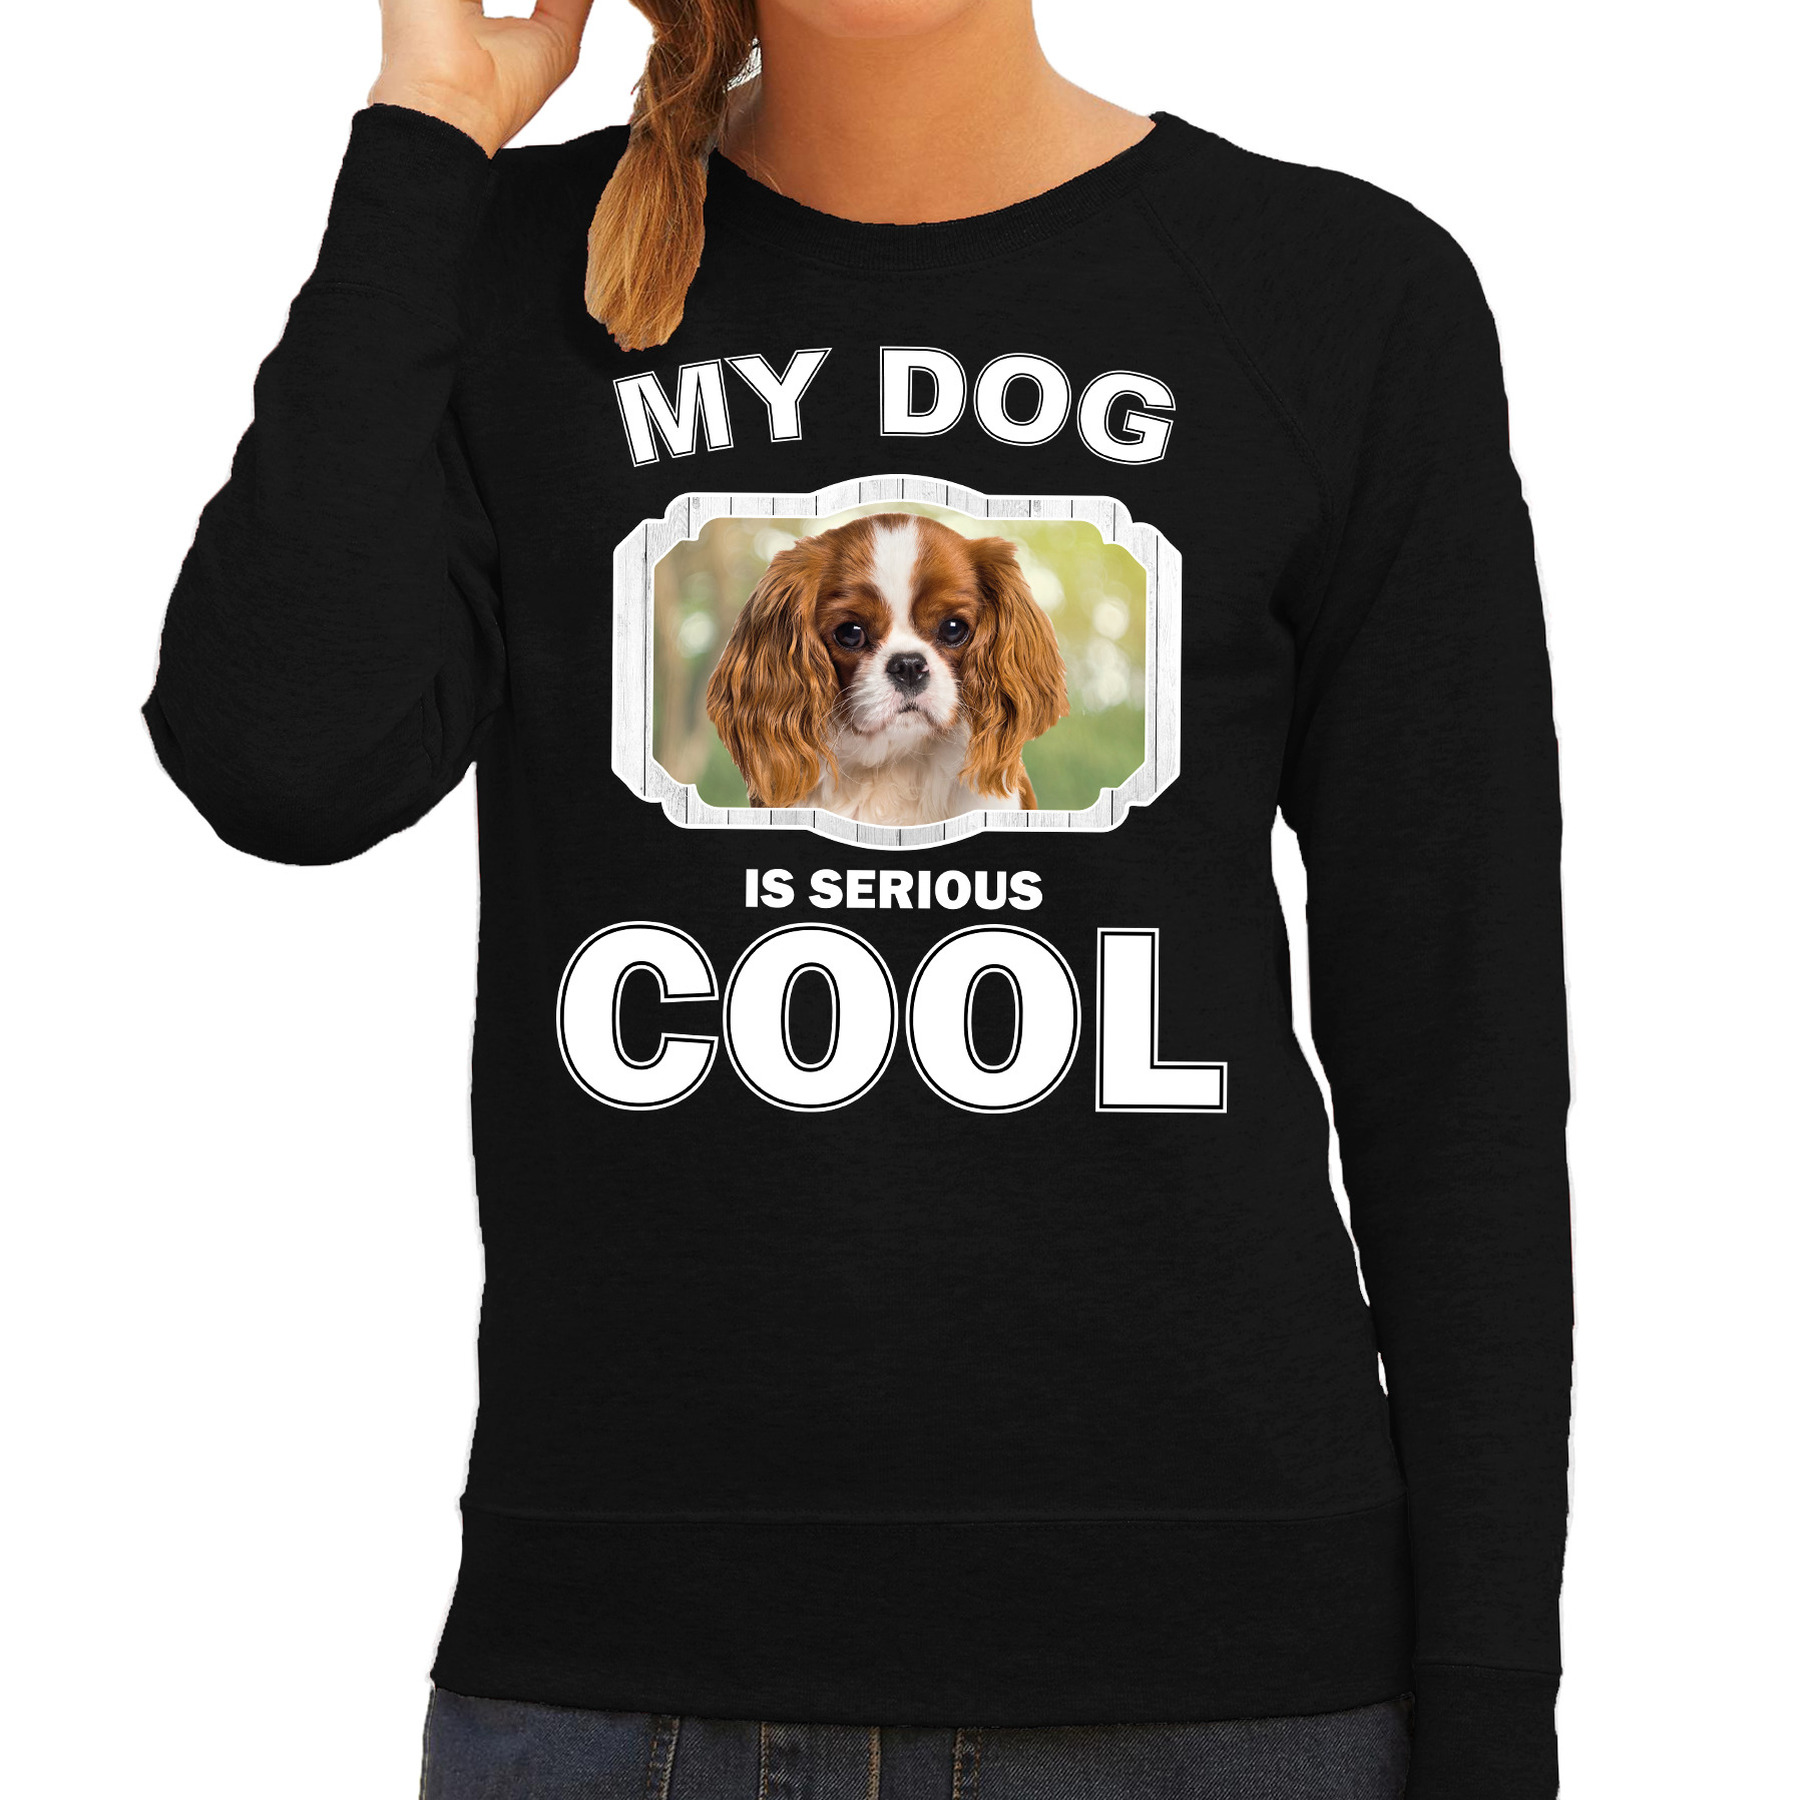 Charles spaniel honden sweater / trui my dog is serious cool zwart voor dames